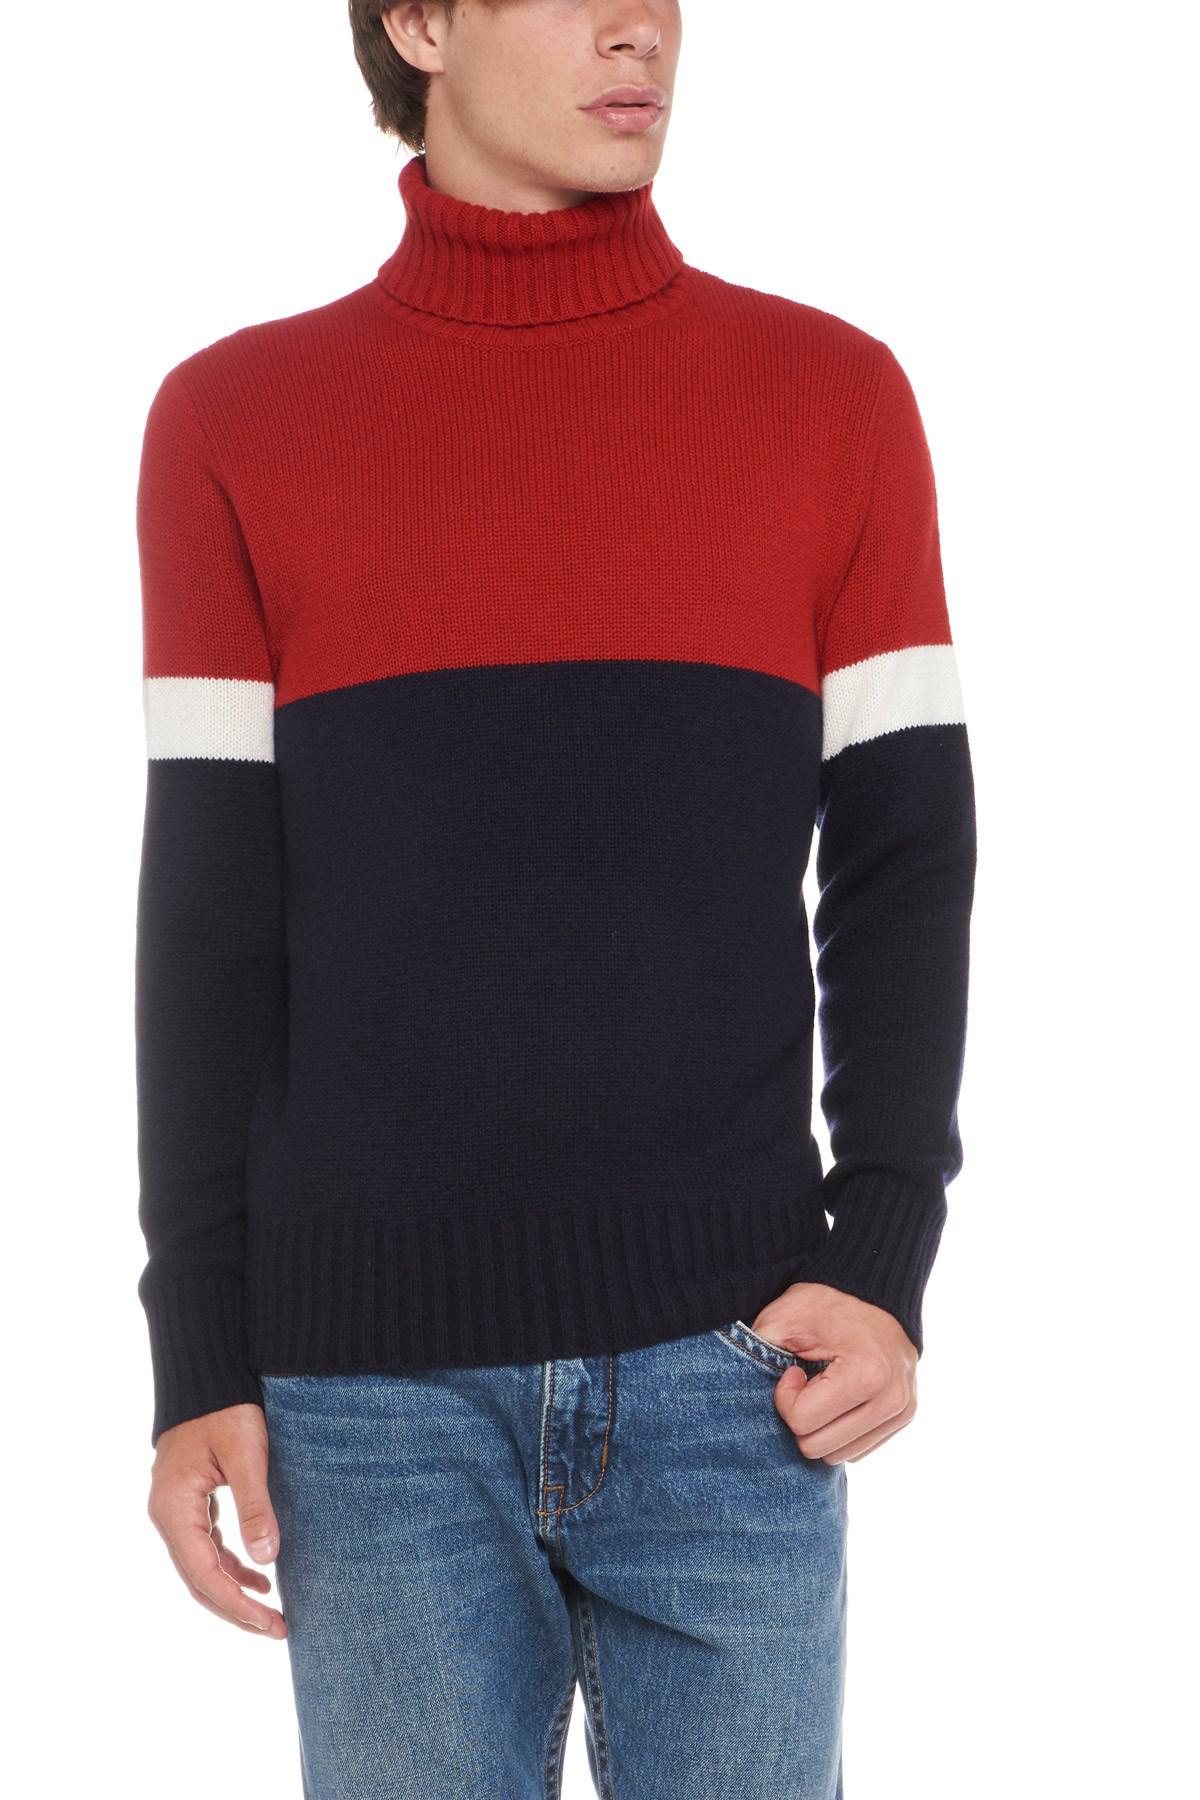 Ralph Lauren BLACK LABEL 100% Cashmere Sweater Ivory 